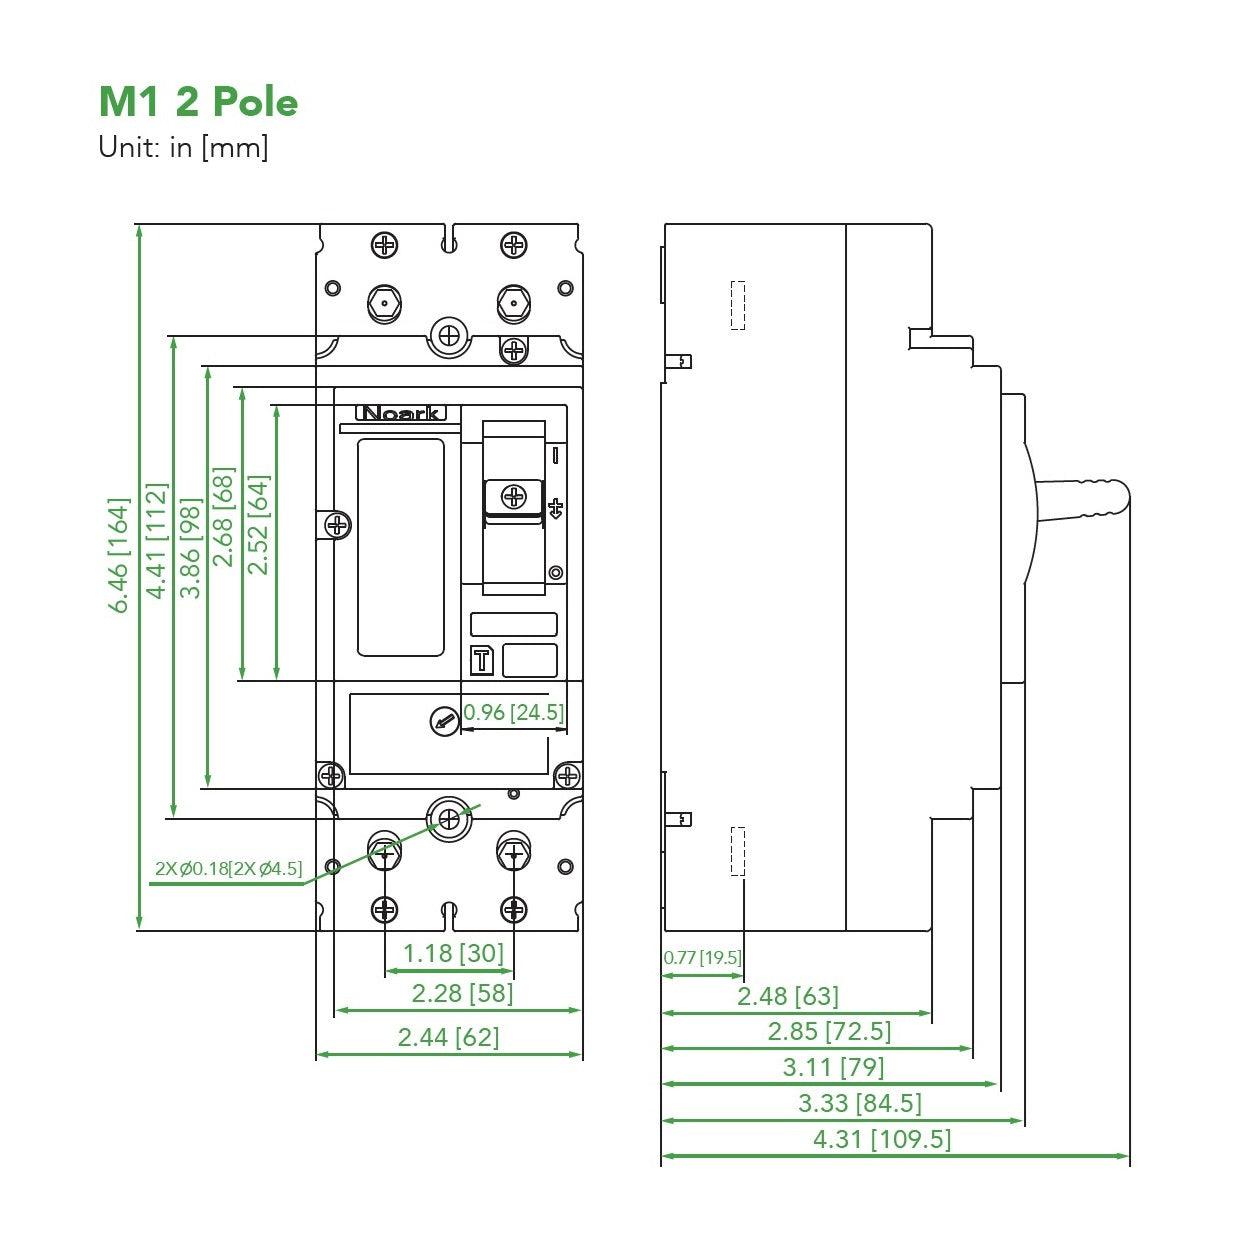 NOARK® Molded Case Circuit Breaker 150A, 2P IC Class S | M1S150T22L - Forces Inc